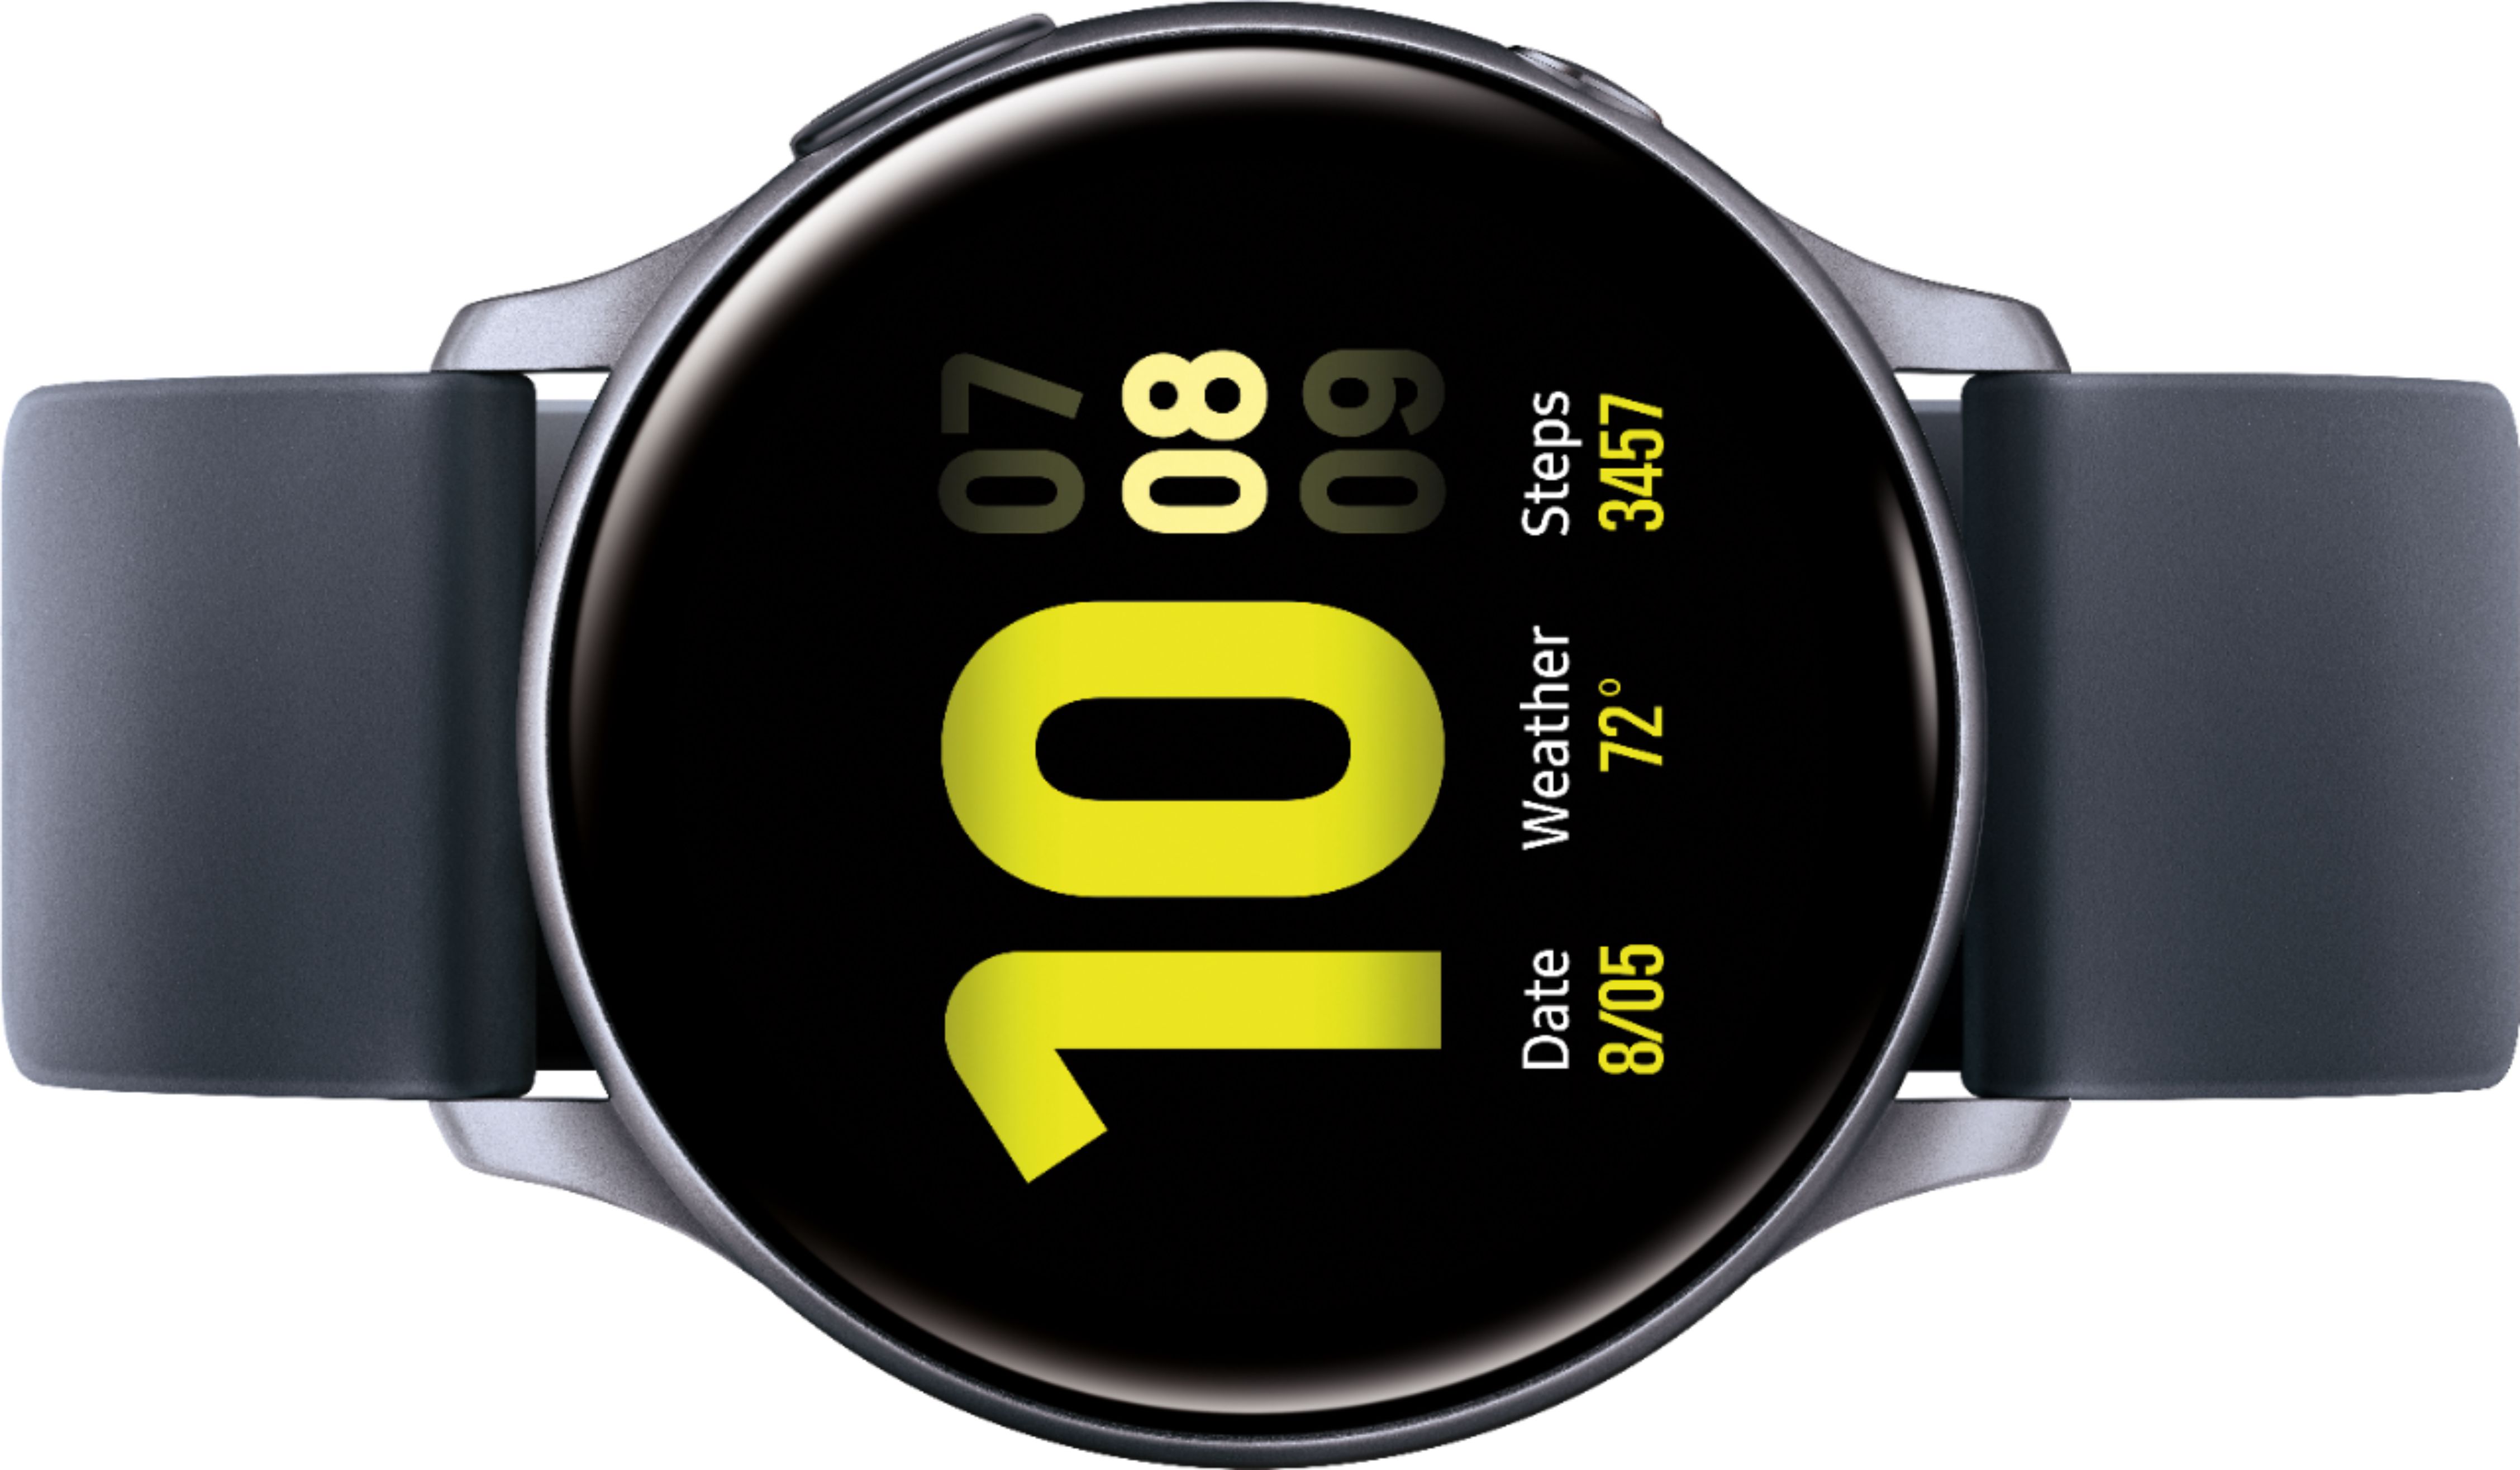 SAMSUNG Galaxy Watch Active 2 Aluminum Smart Watch (44mm) - Aqua Black -  SM-R820NZKAXAR 